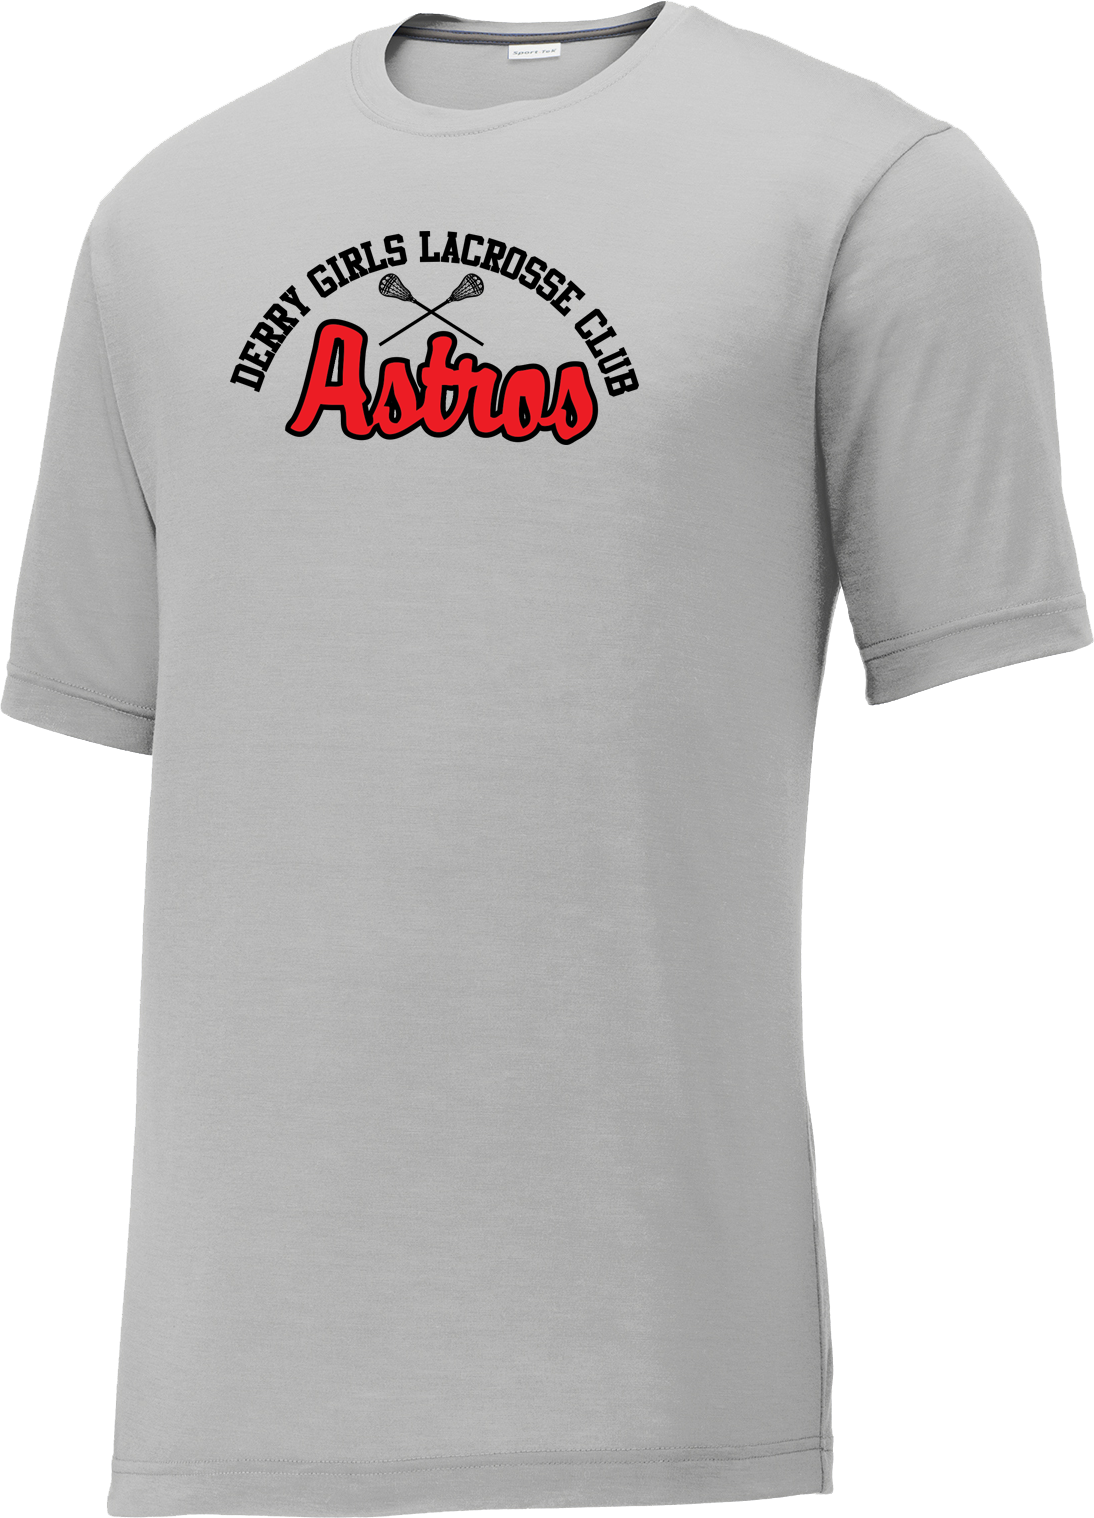 Derry Girls Lacrosse Men's Silver CottonTouch Performance T-Shirt